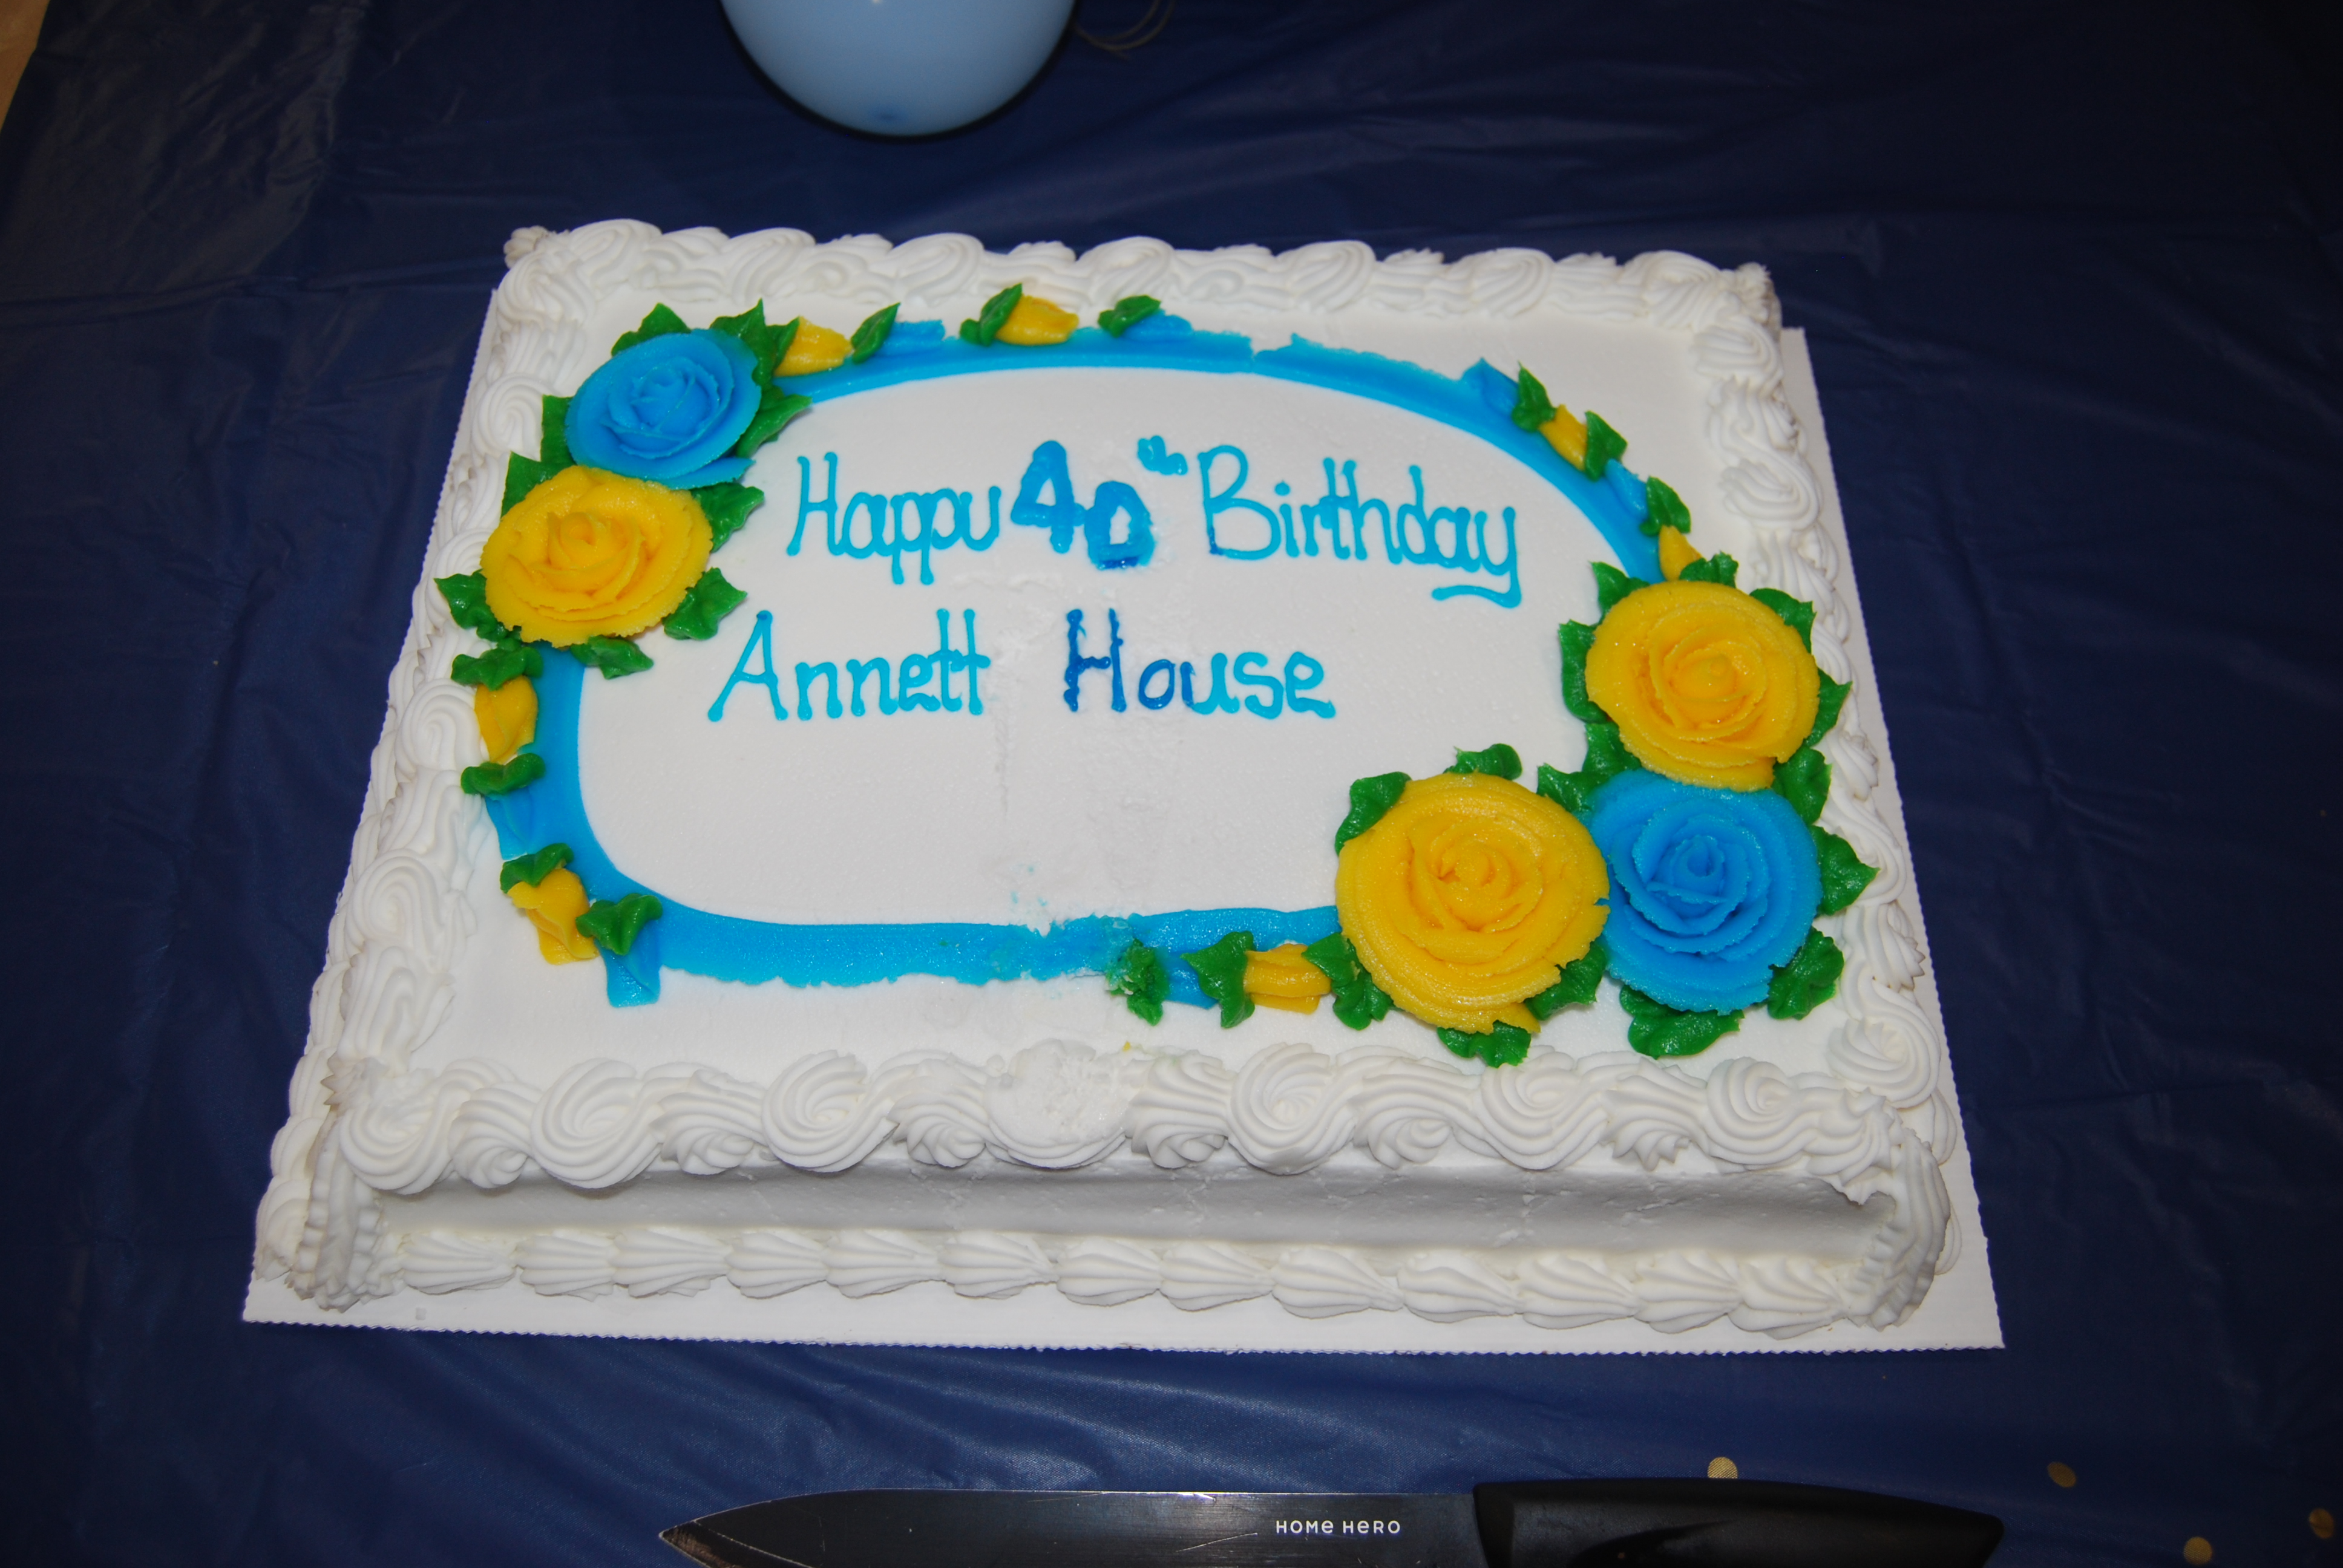 Annett House 40th Birthday Celebrations Image